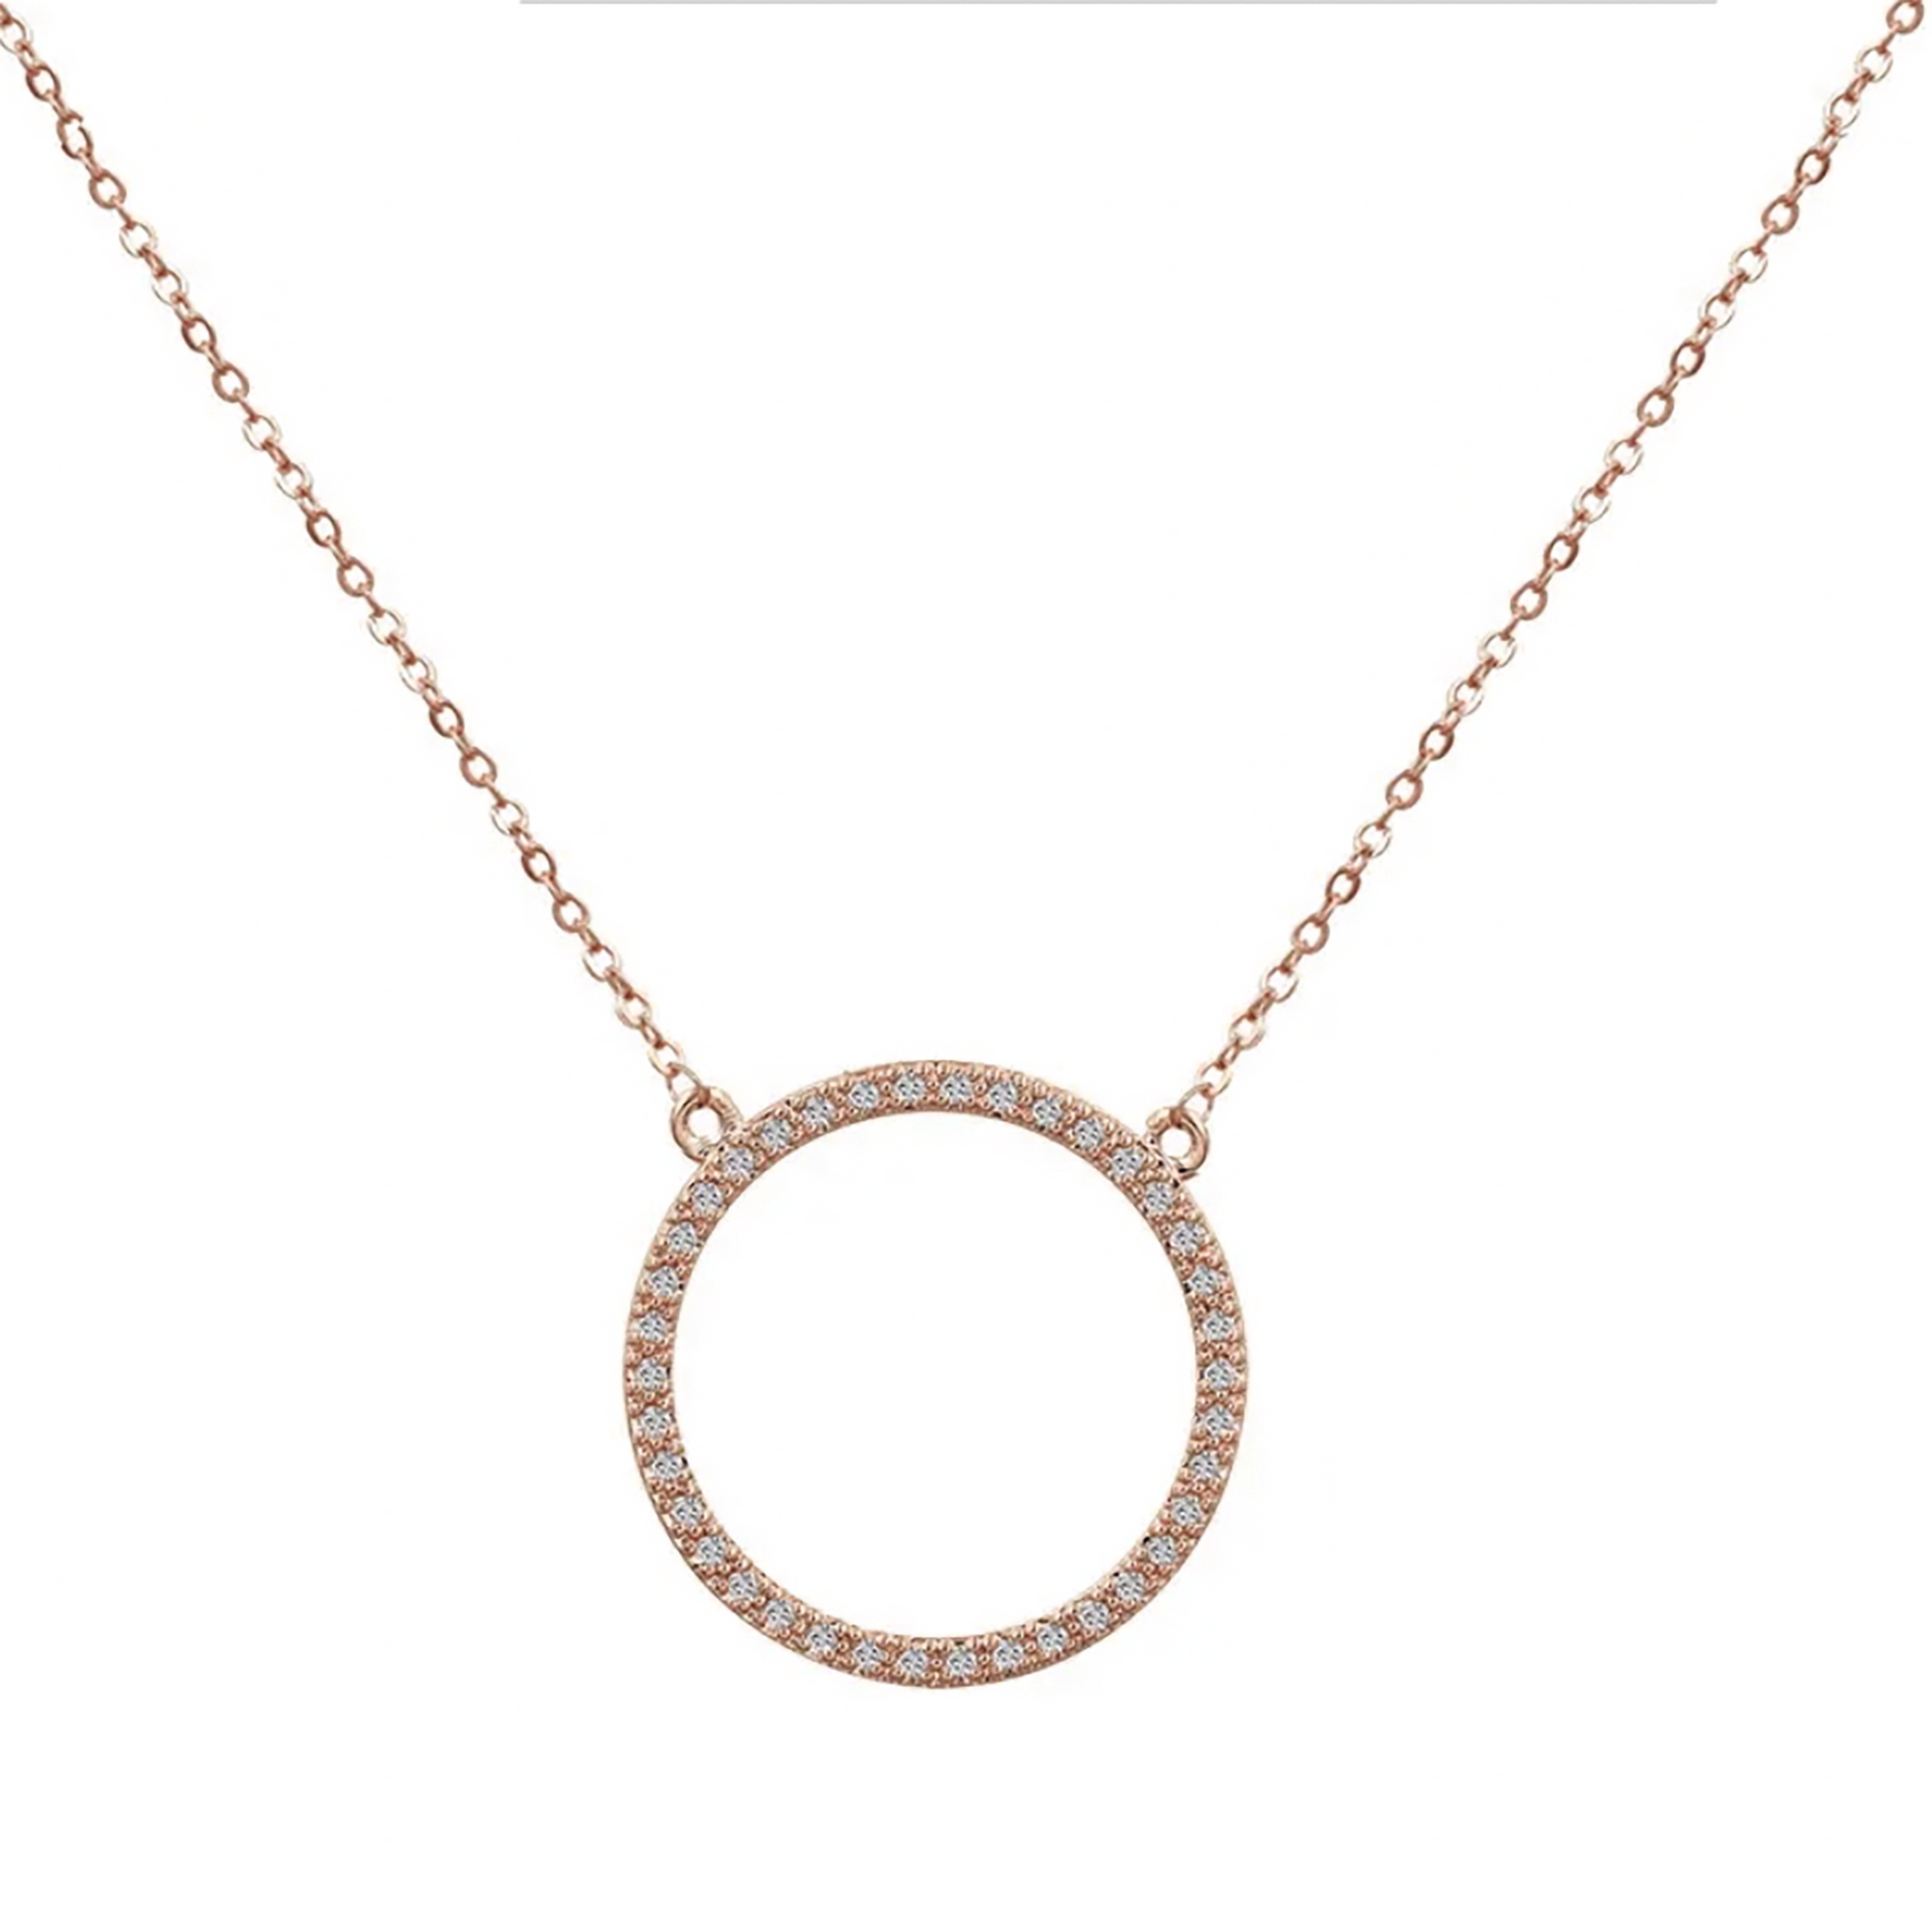 Diamond circle pendant necklace rose gold